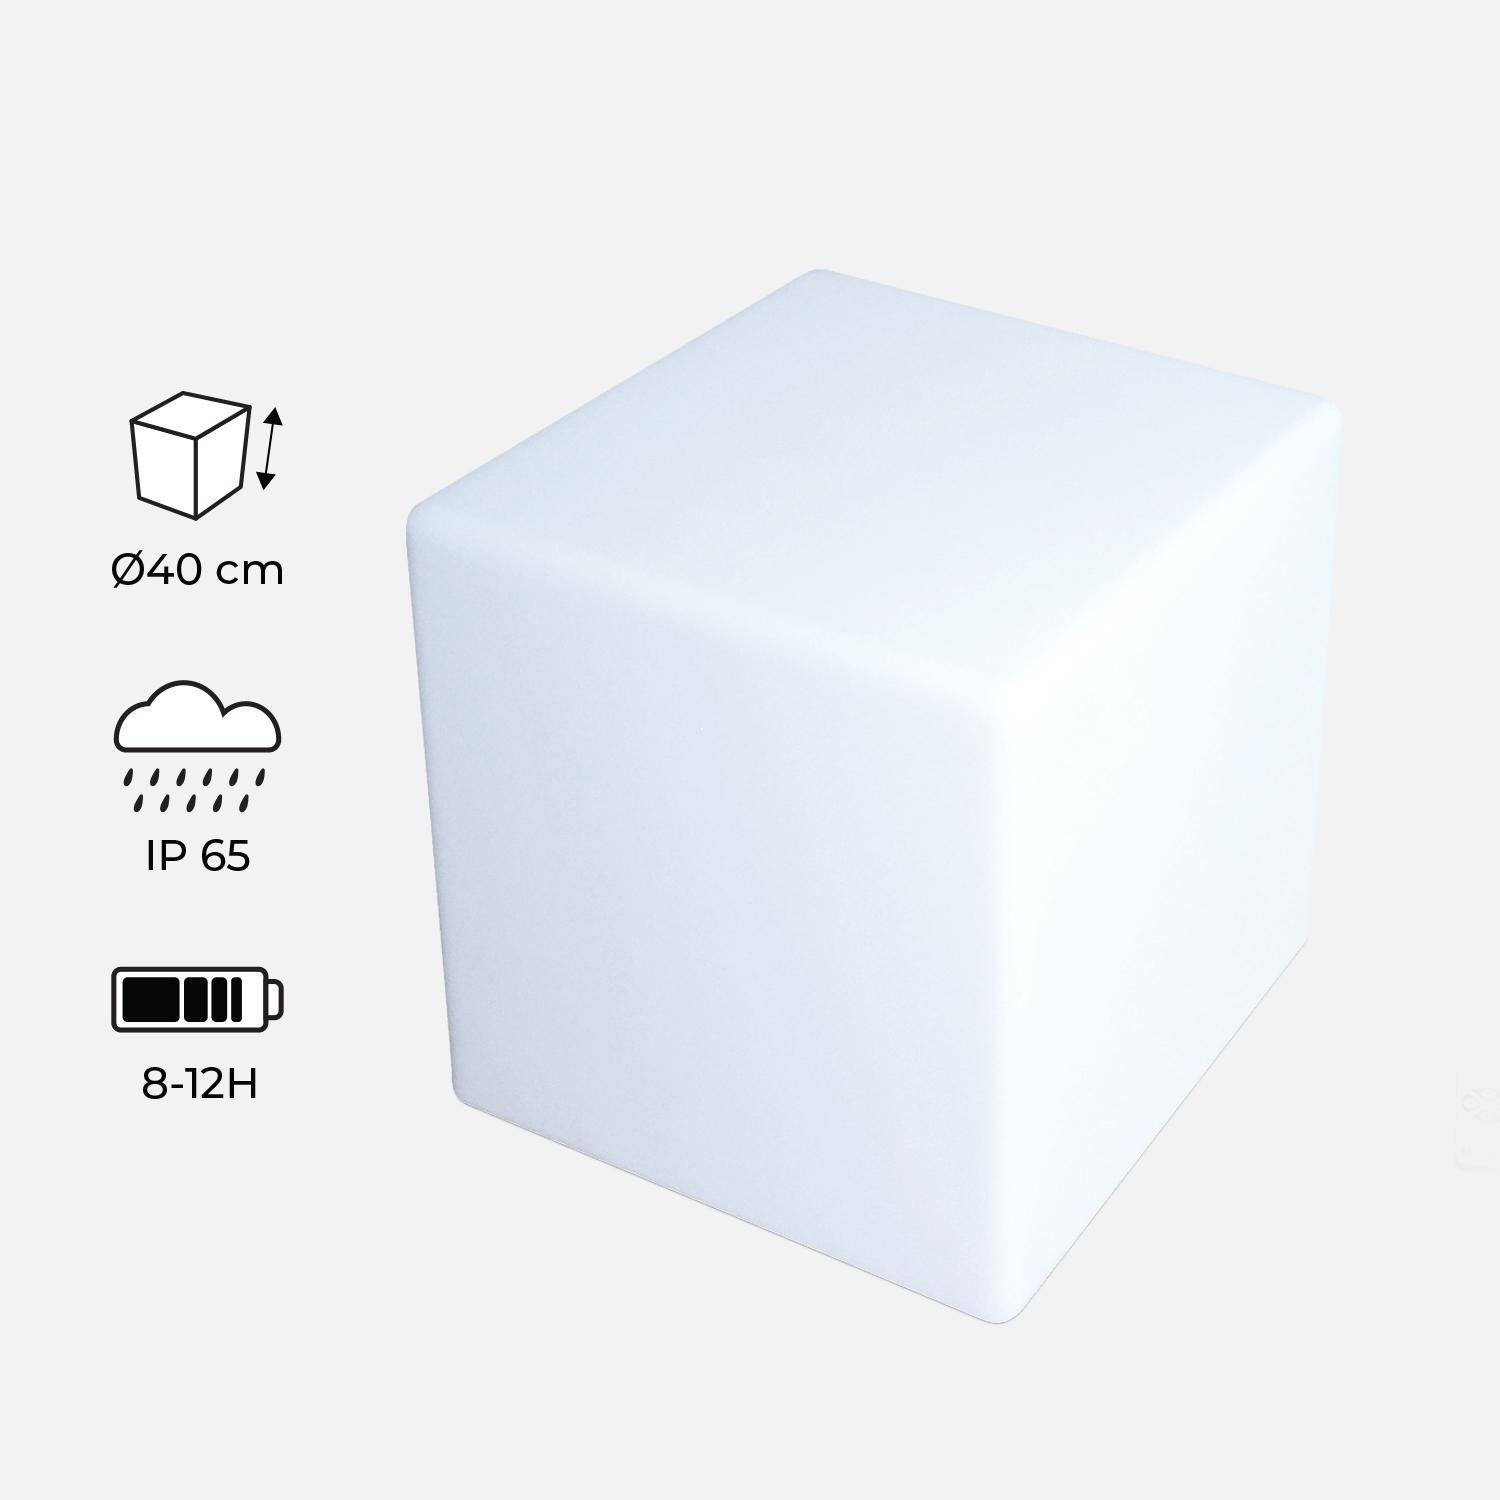 Cubo LED - Cubo de luz decorativo, 40x40cm, mando a distancia